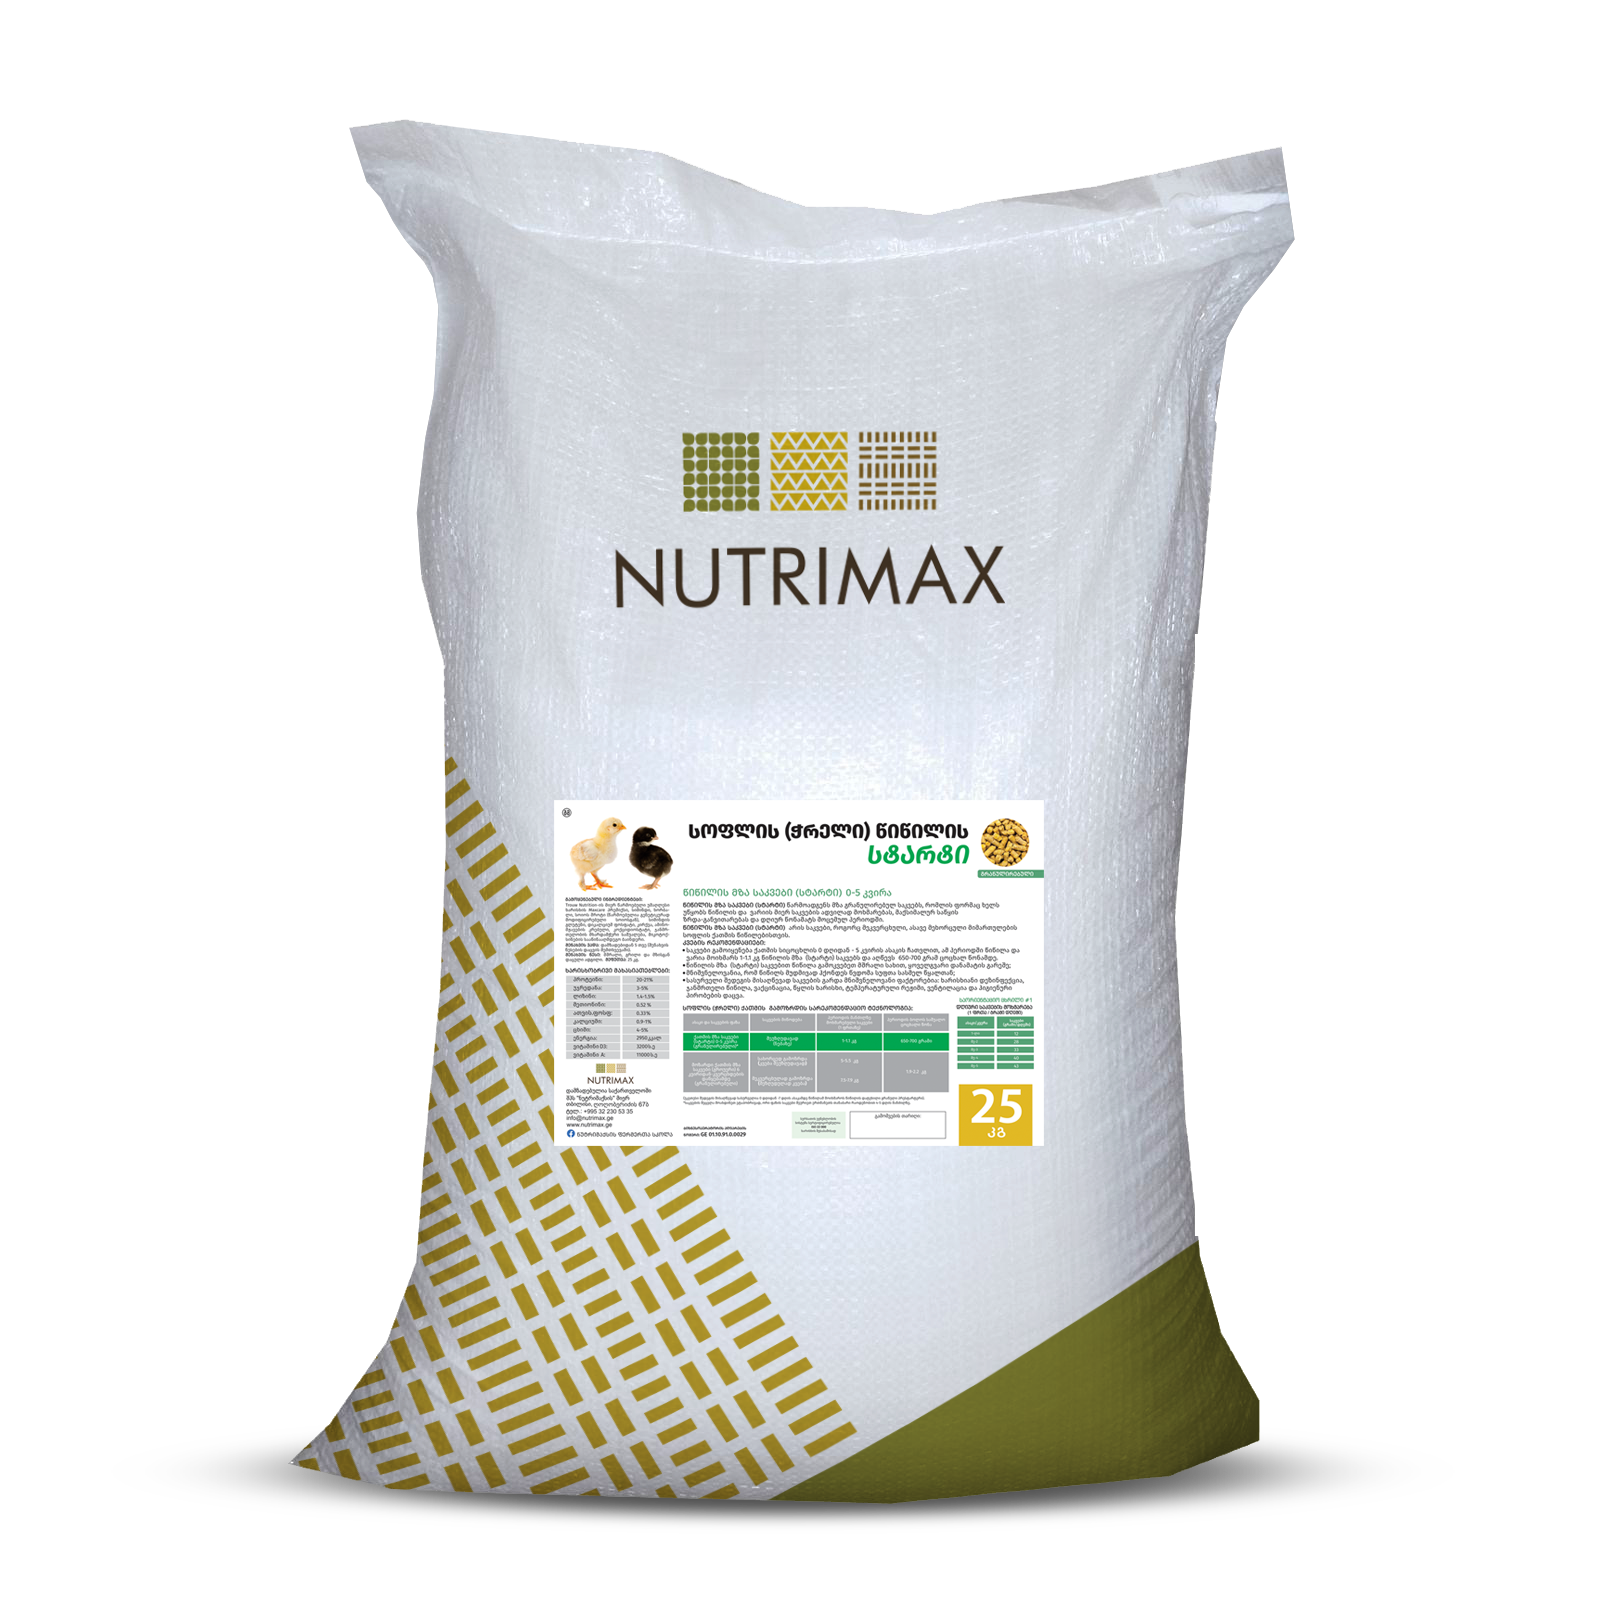 Naturalmaxx® Harina bioactive carbon activo doypack - Naturalmaxx